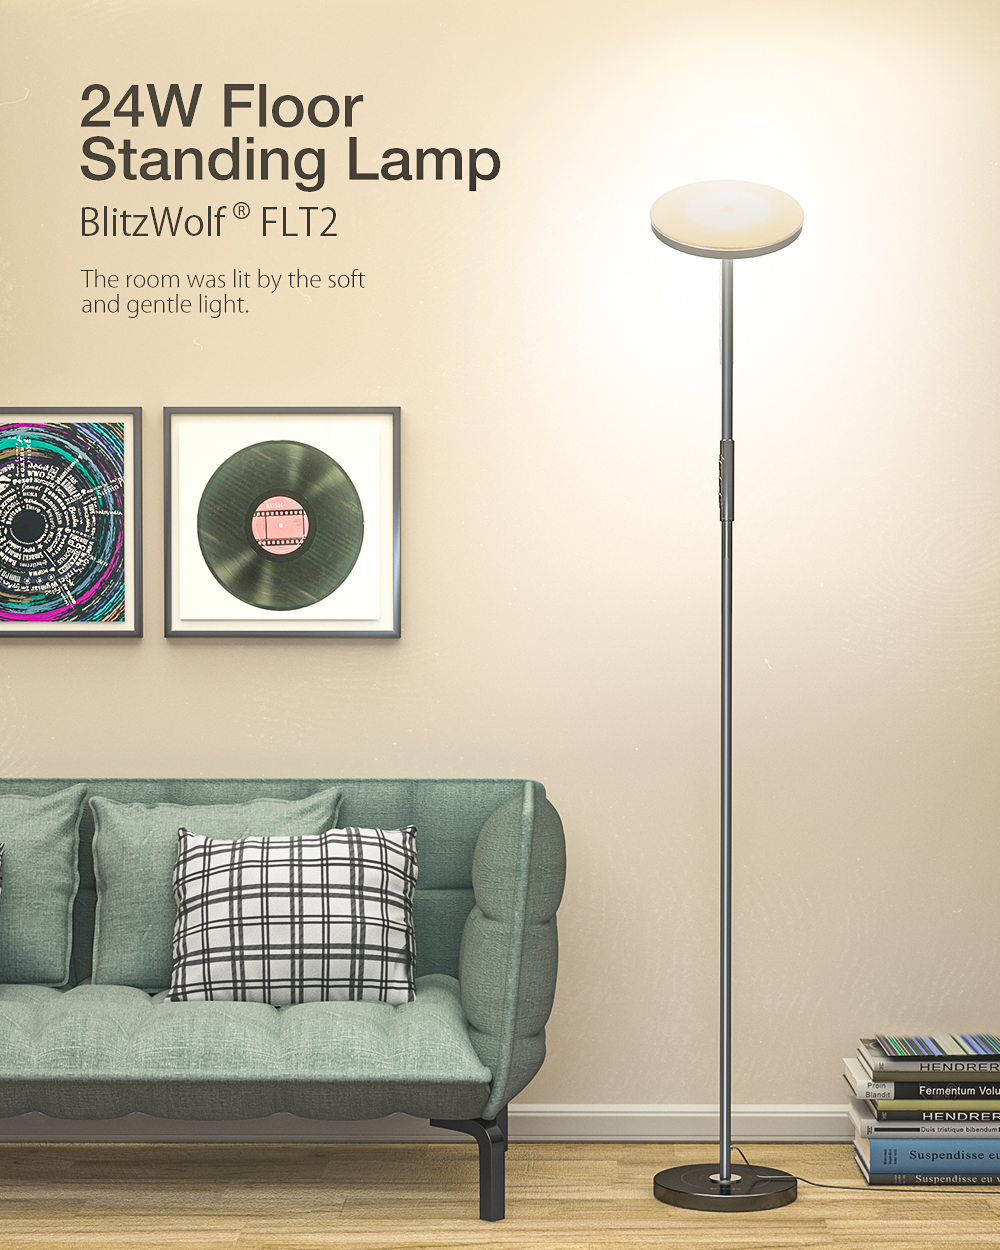 BlitzWolfreg-BW-FLT2-24W-Floor-Standing-Lamp-with-2700-6500K-Color-Temperature-5-Brightness-Levels-R-1813726-1